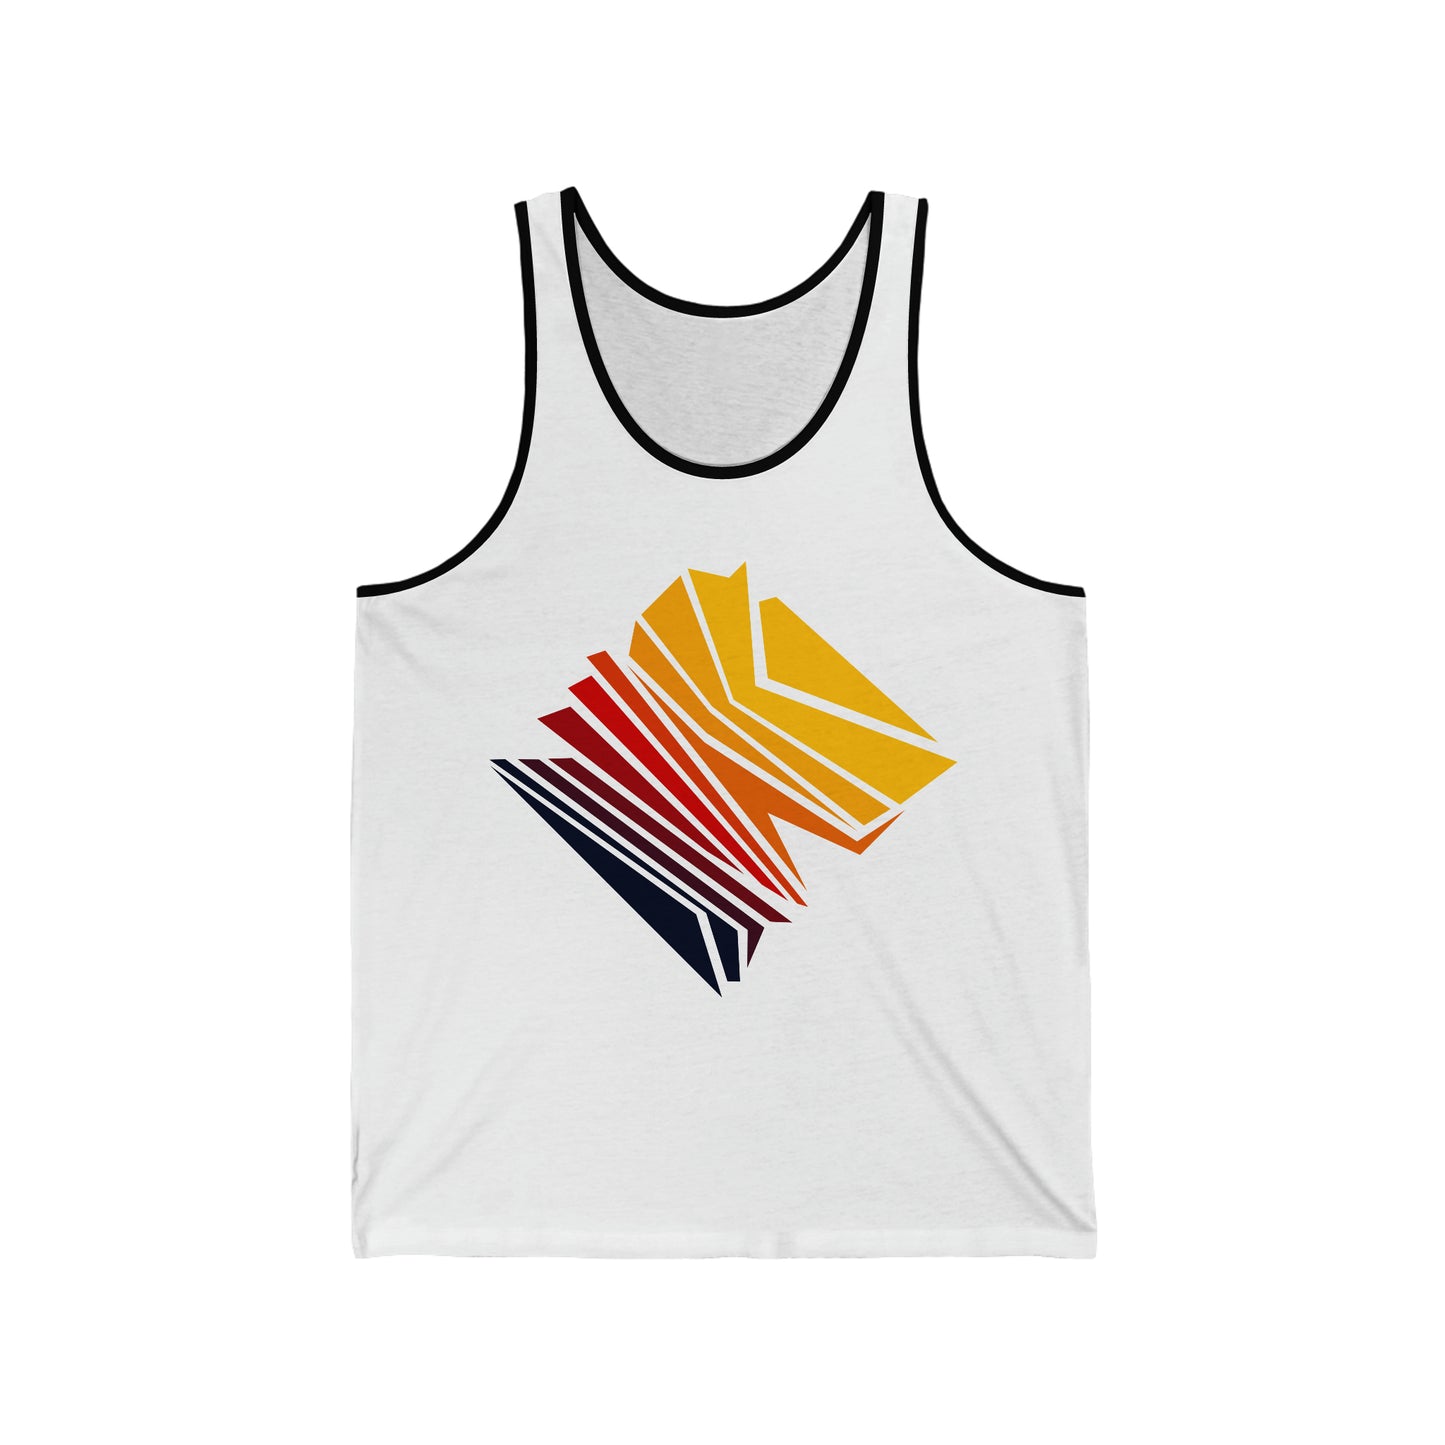 MINIMAL SUNSET TANK 101 - Camiseta de tirantes unisex